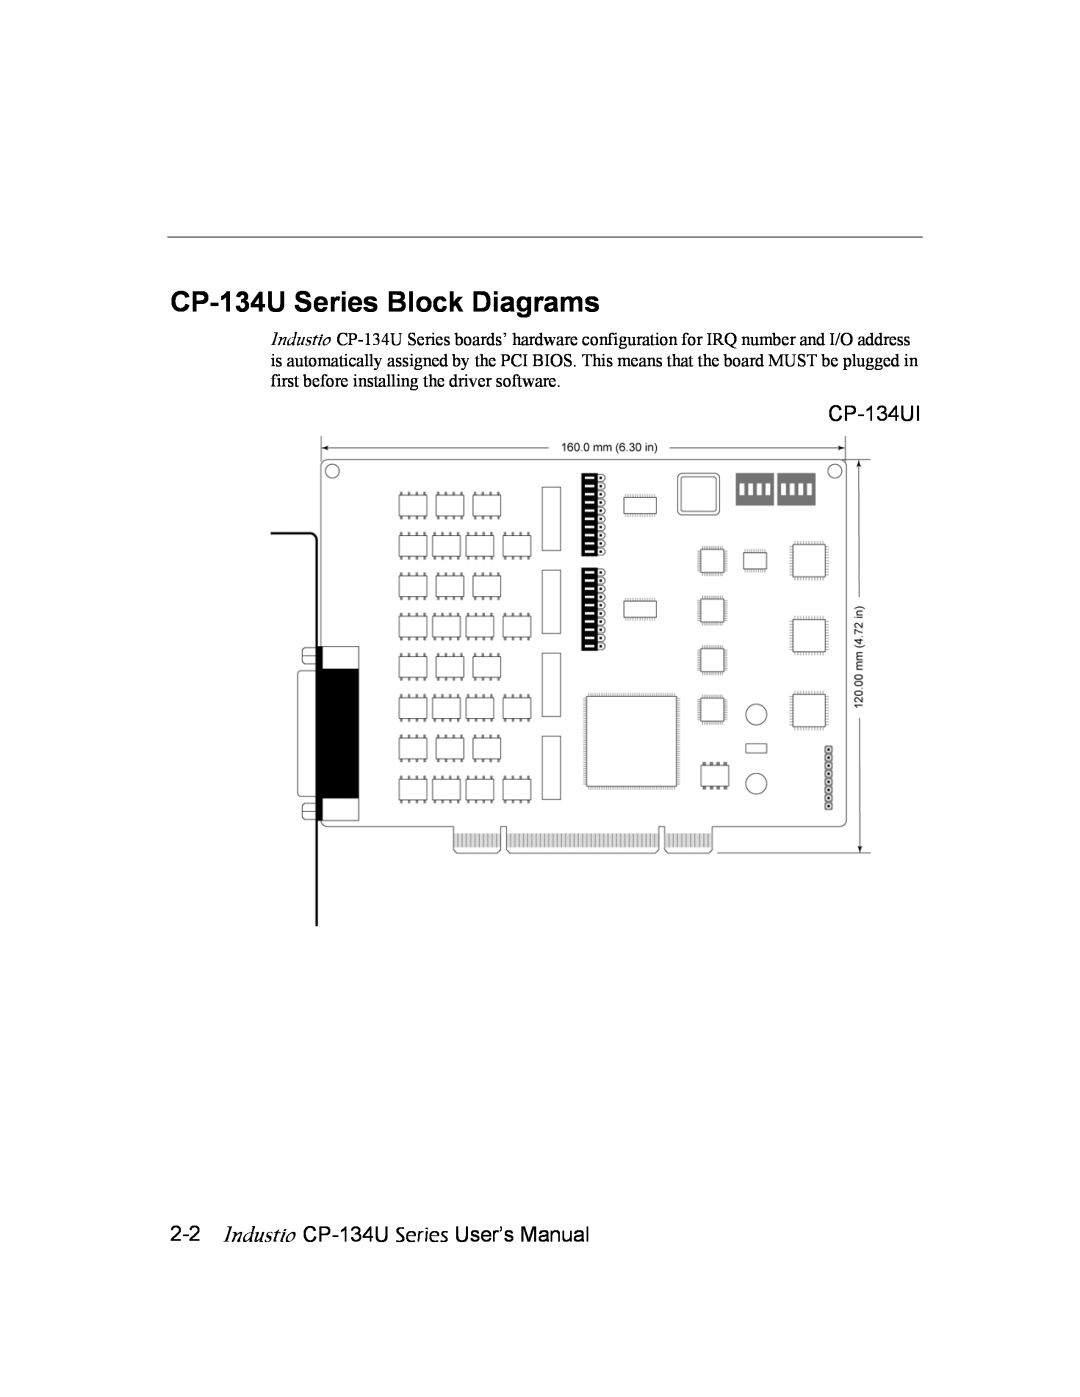 Moxa Technologies user manual CP-134U Series Block Diagrams, CP-134UI 2-2 Industio CP-134U Series User’s Manual 